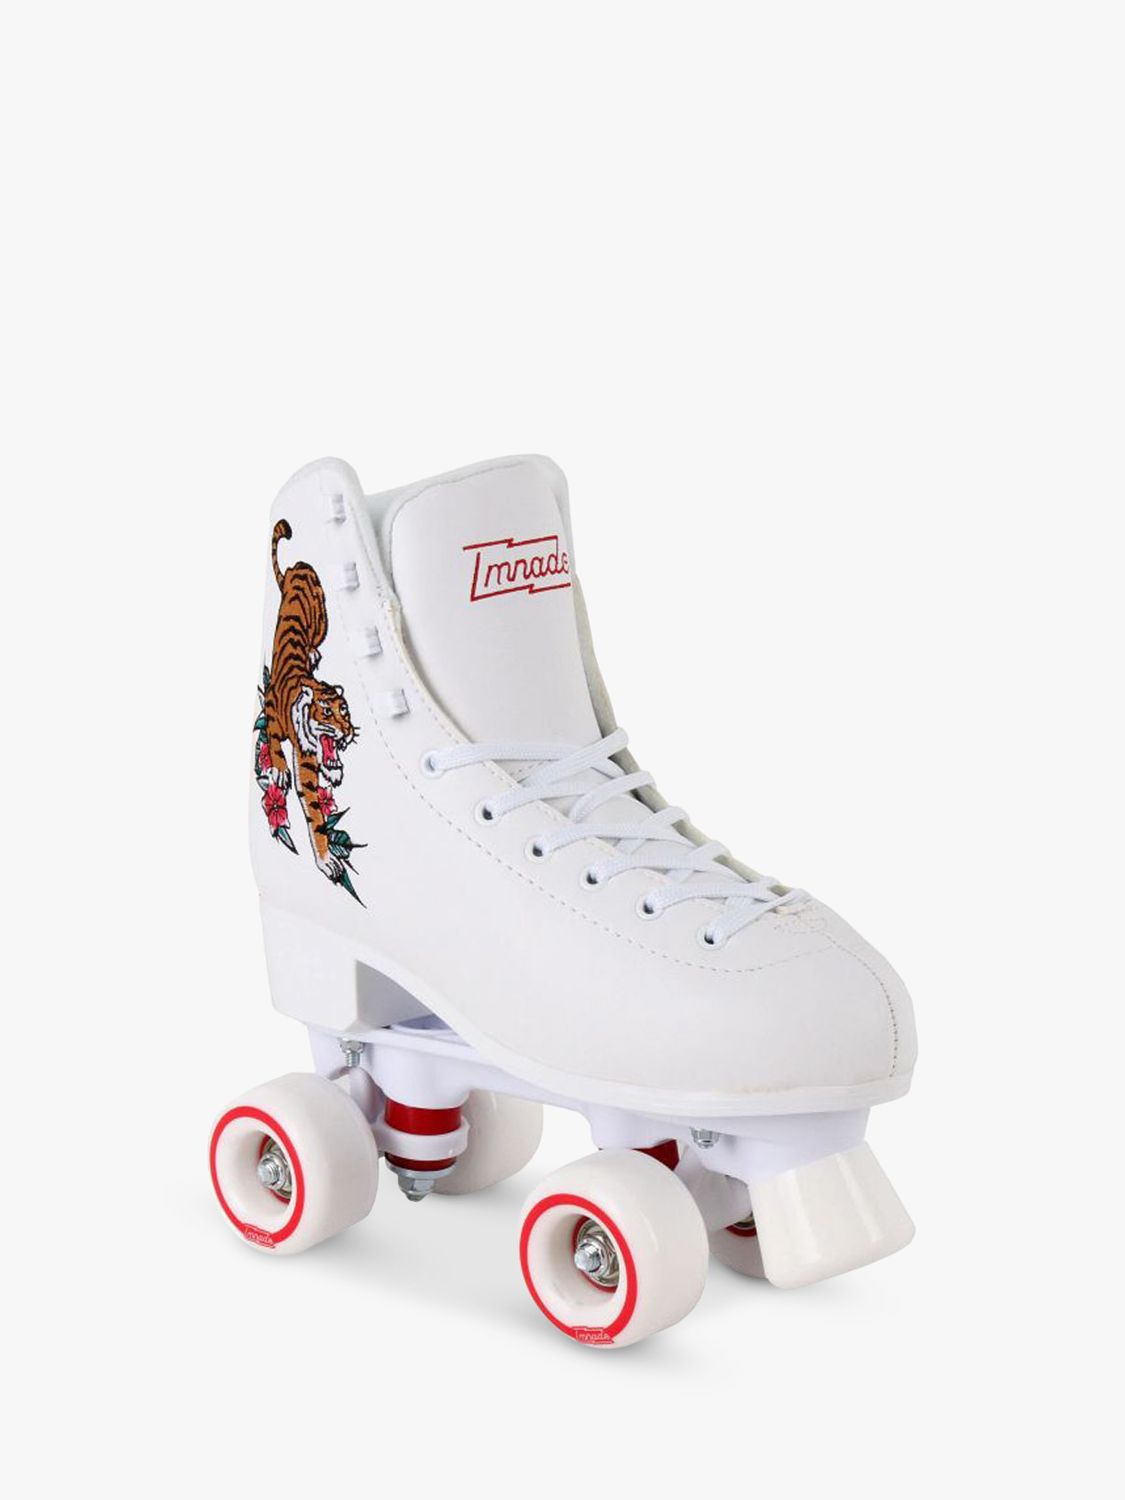 Girls' Roller Skating, Skateboarding Shoes with Wheels Sports Gymnastics  Fashion Multi-purpose Kick Roller Shoe for Boys Girls : 